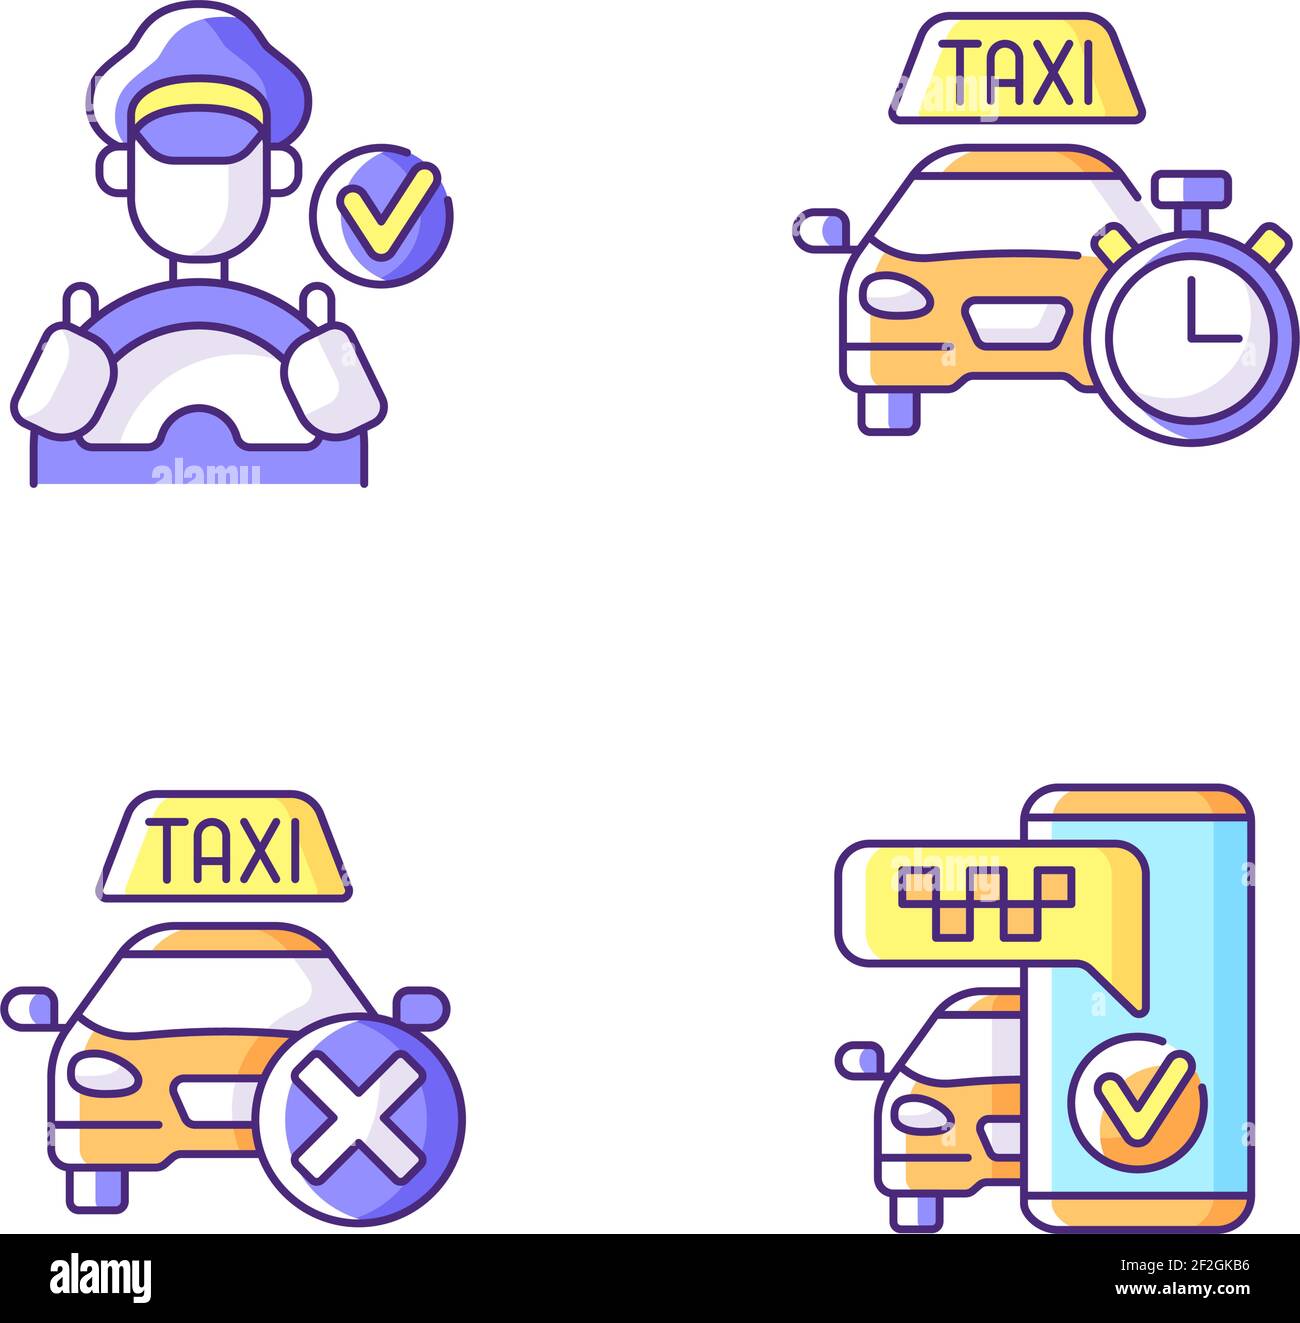 Urban Taxi Service RGB-Farbsymbole gesetzt Stock Vektor